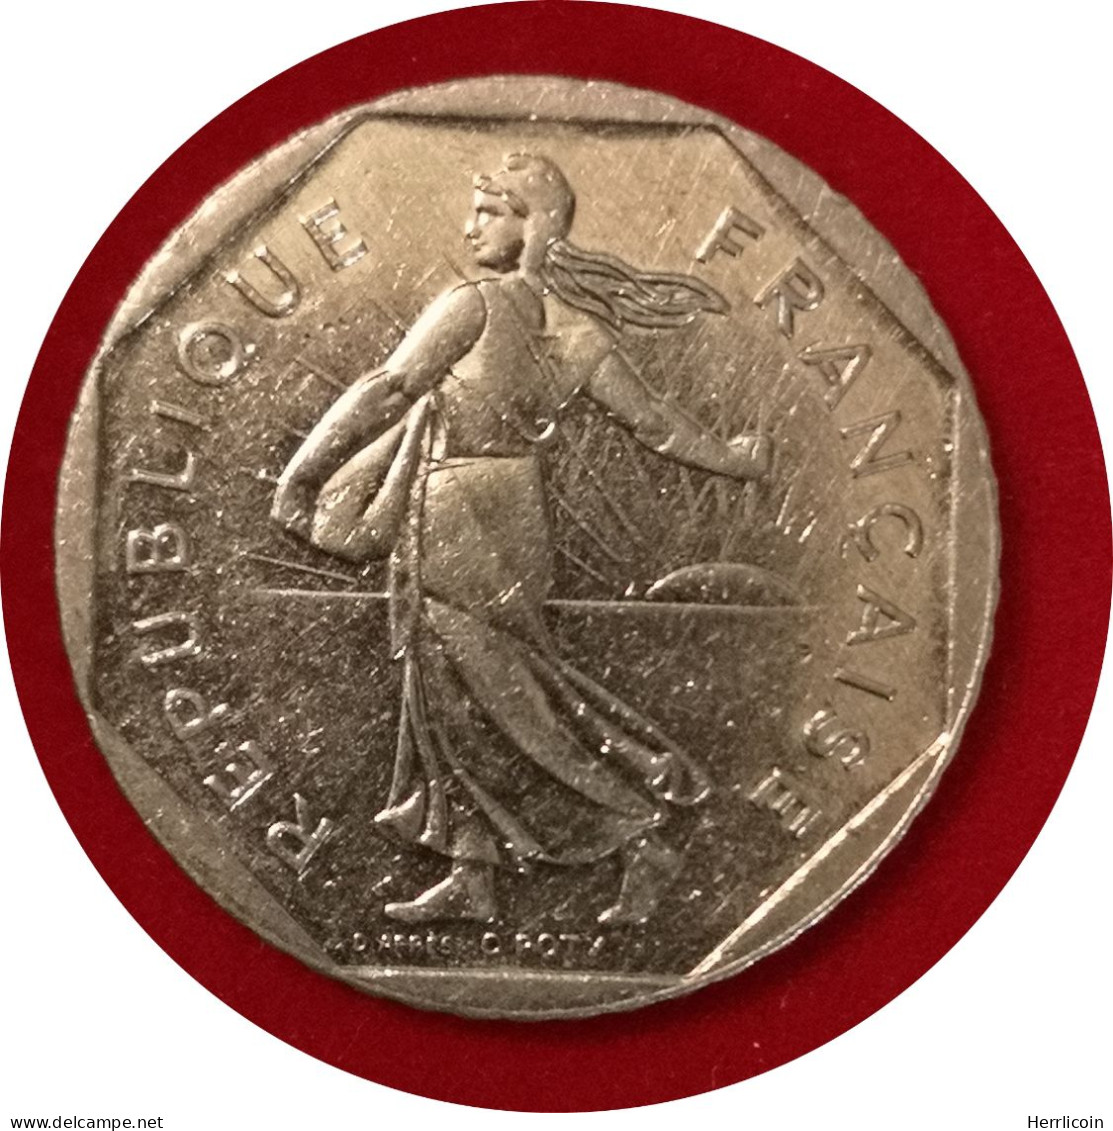 Monnaie France - 1998 - 2 Francs Semeuse - 2 Francs